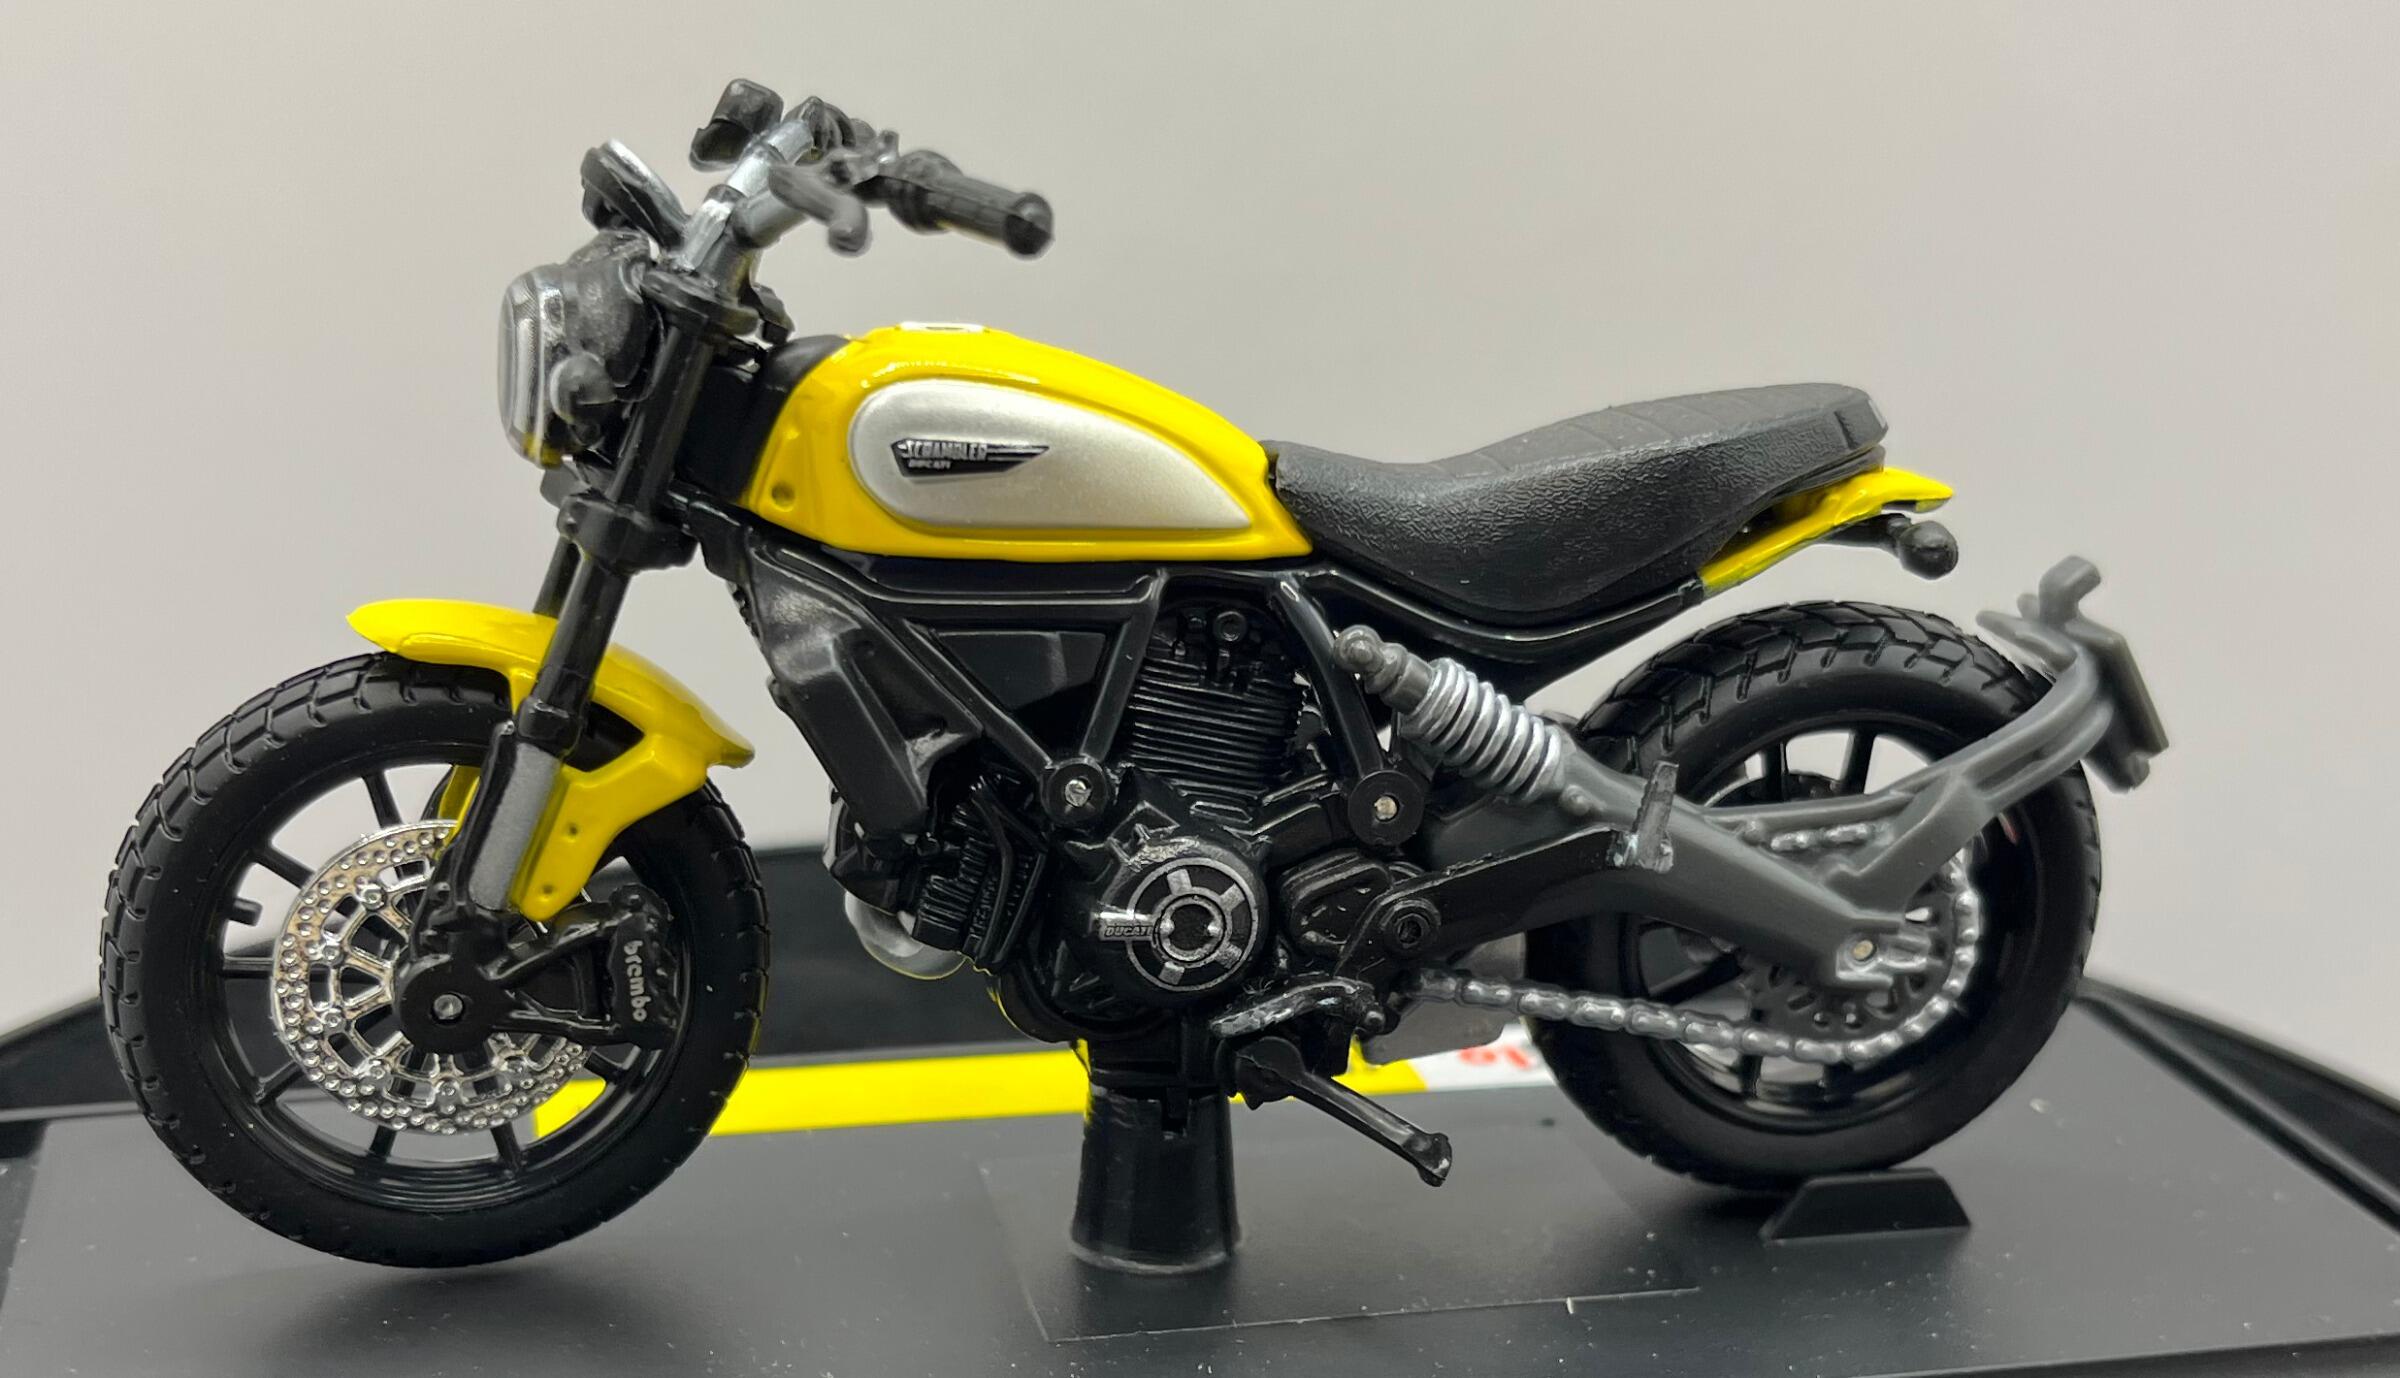 Ducati Scrambler in yellow / black, 1:18 scale diecast motorbike model from Maisto, MAi14174